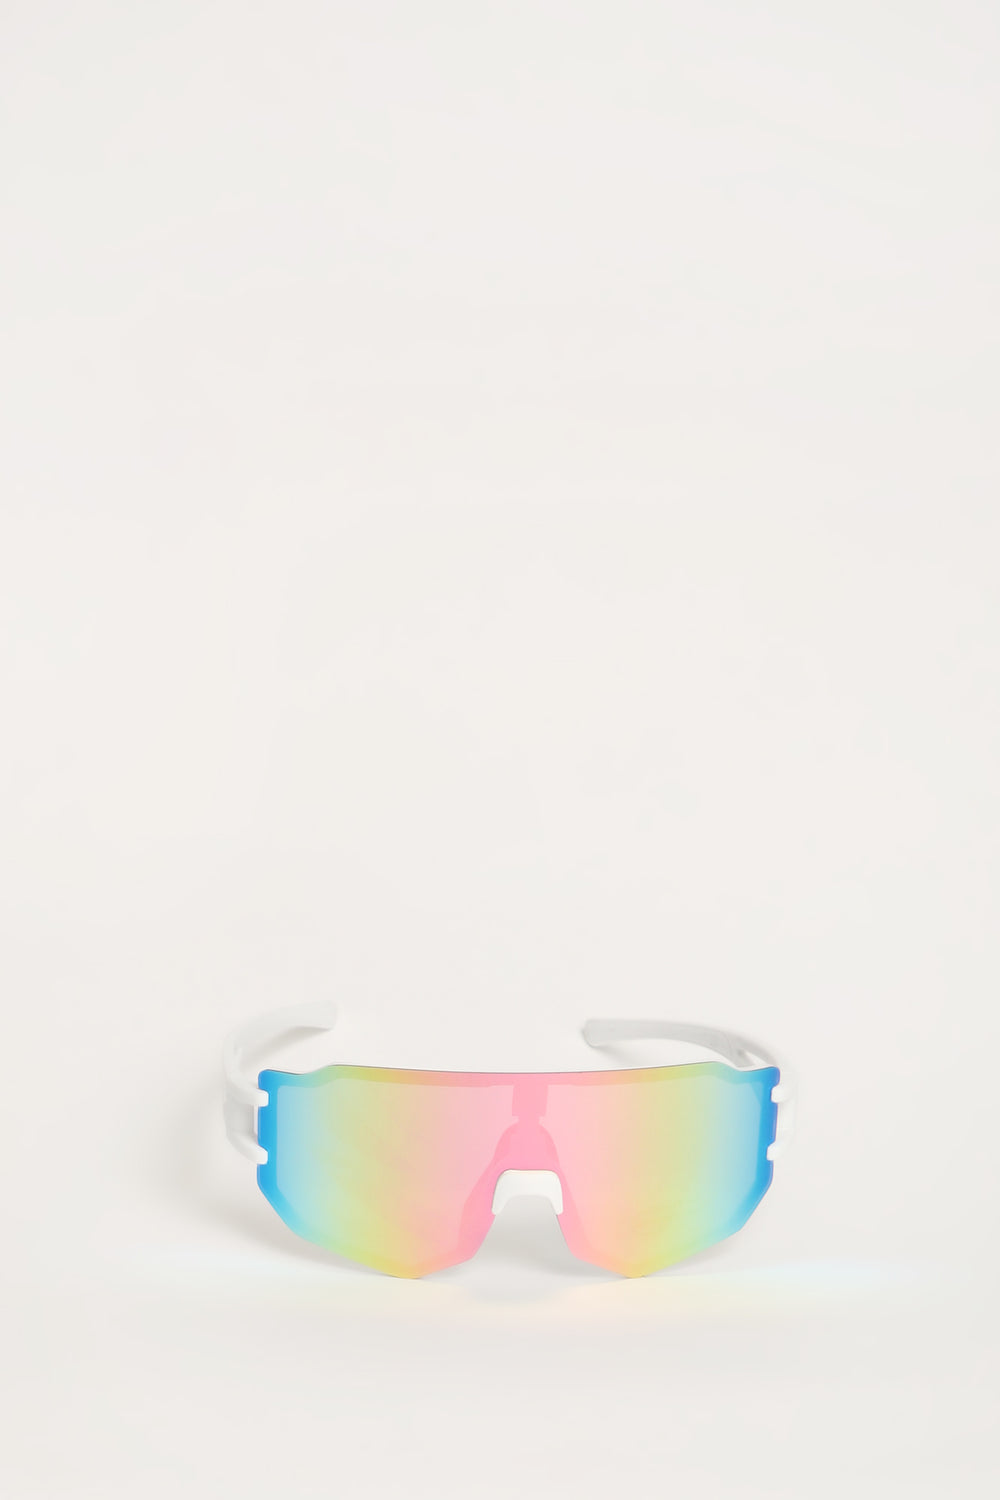 West49 Rainbow Shield Sunglasses West49 Rainbow Shield Sunglasses